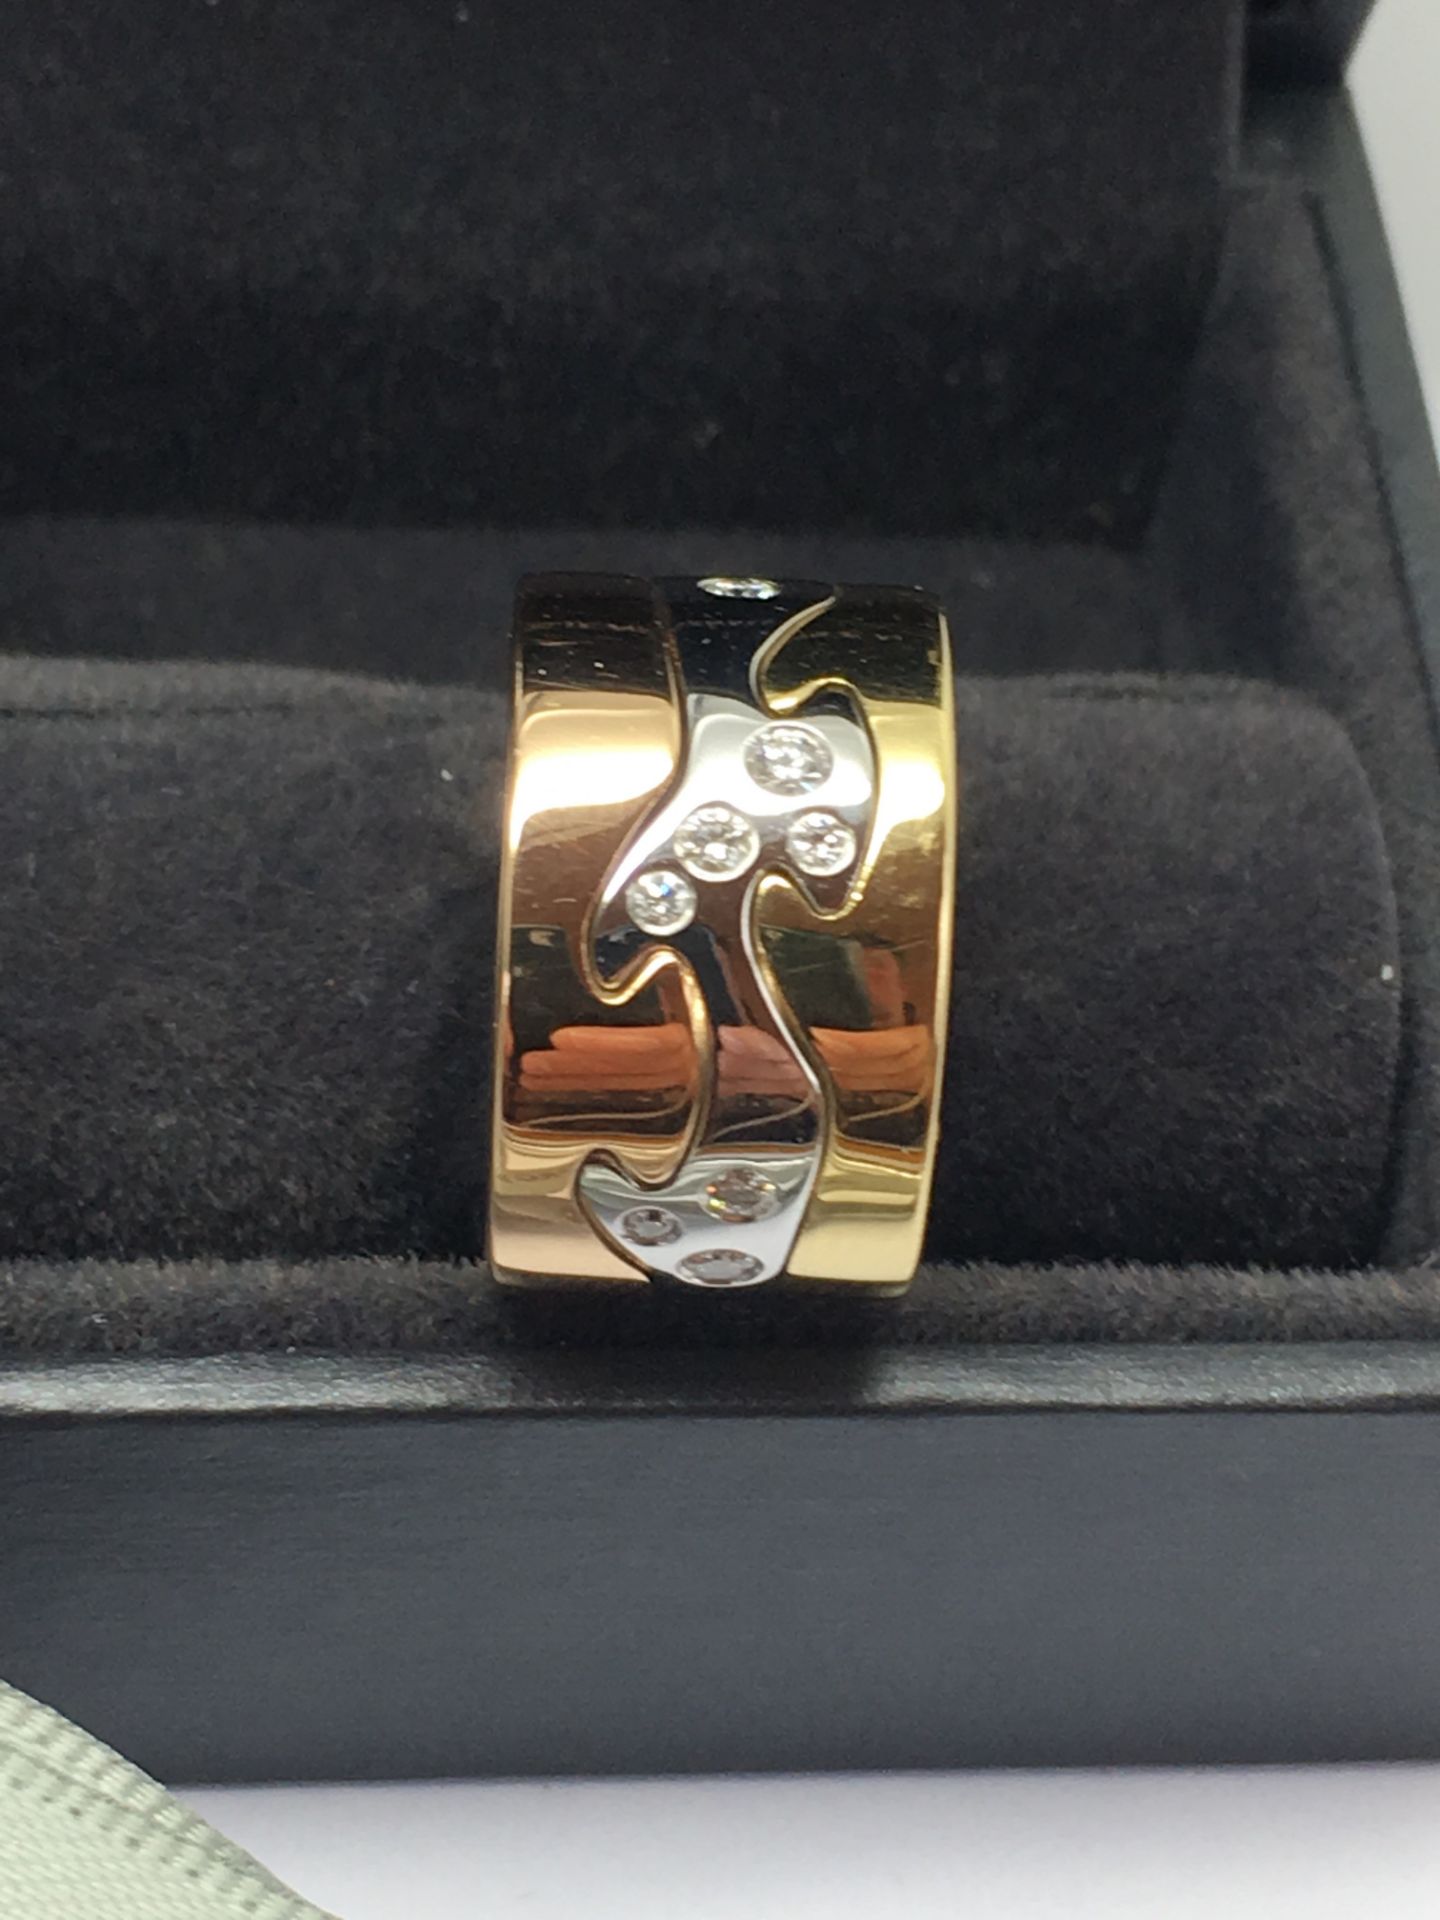 18ct Gold GEORG JENSEN Fusion Diamond Ring - Still Available on Georg Jensen Website for £2500 - Image 4 of 5